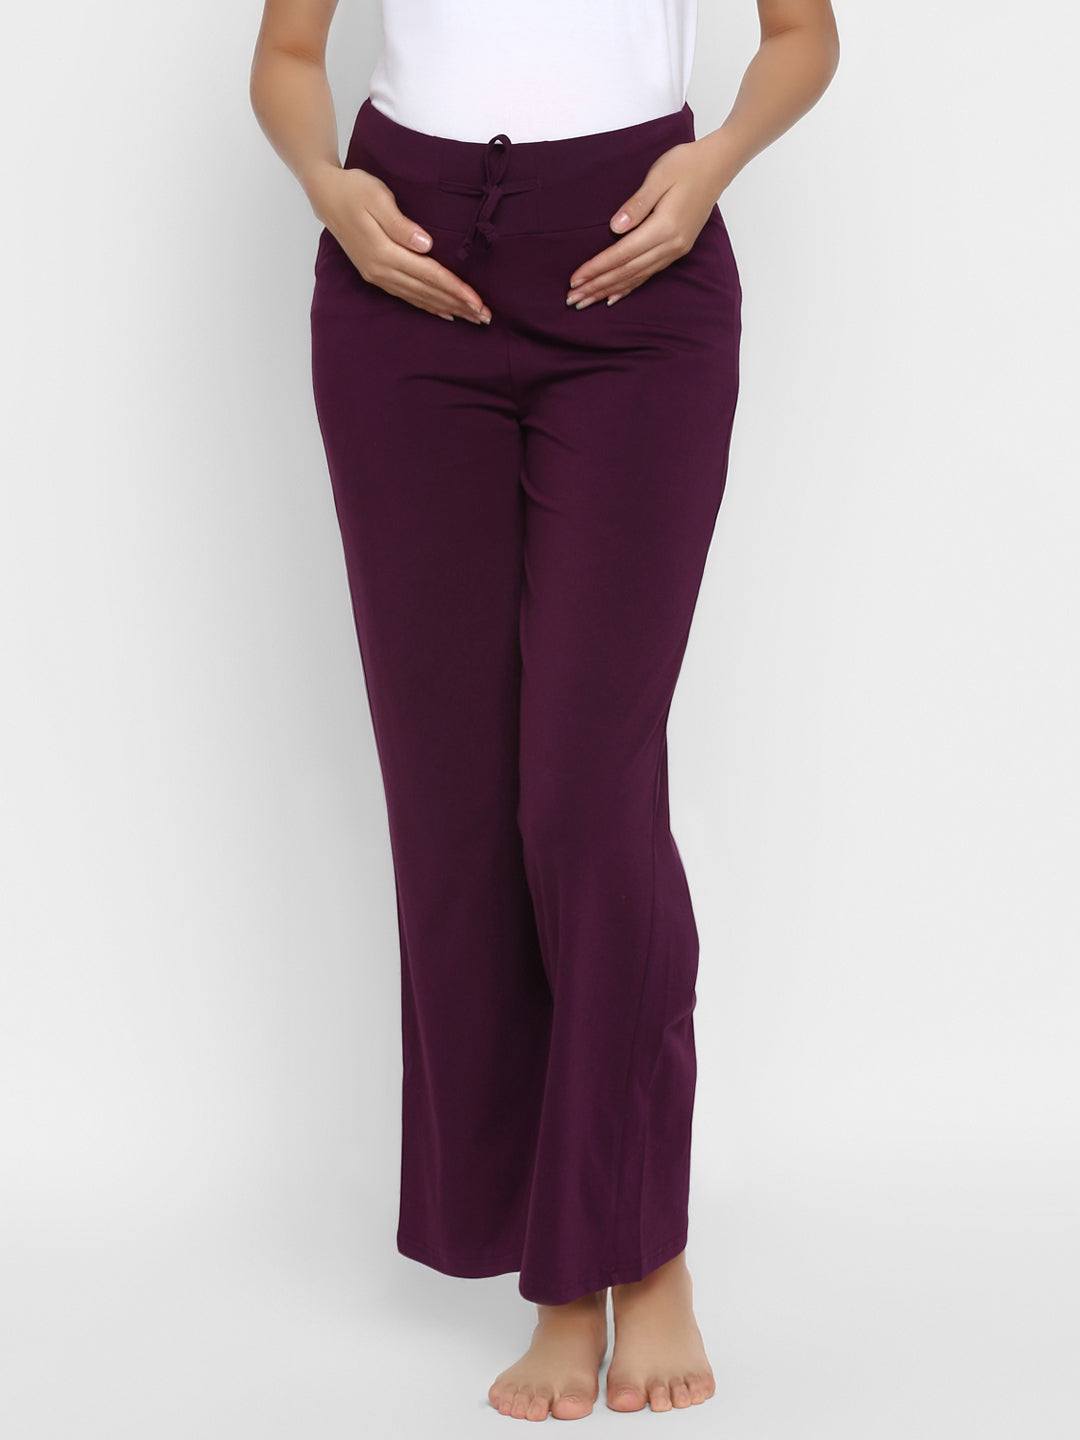 Purple colour Legging Pants for women and Girls Ankle Length  Non  Transparent  100